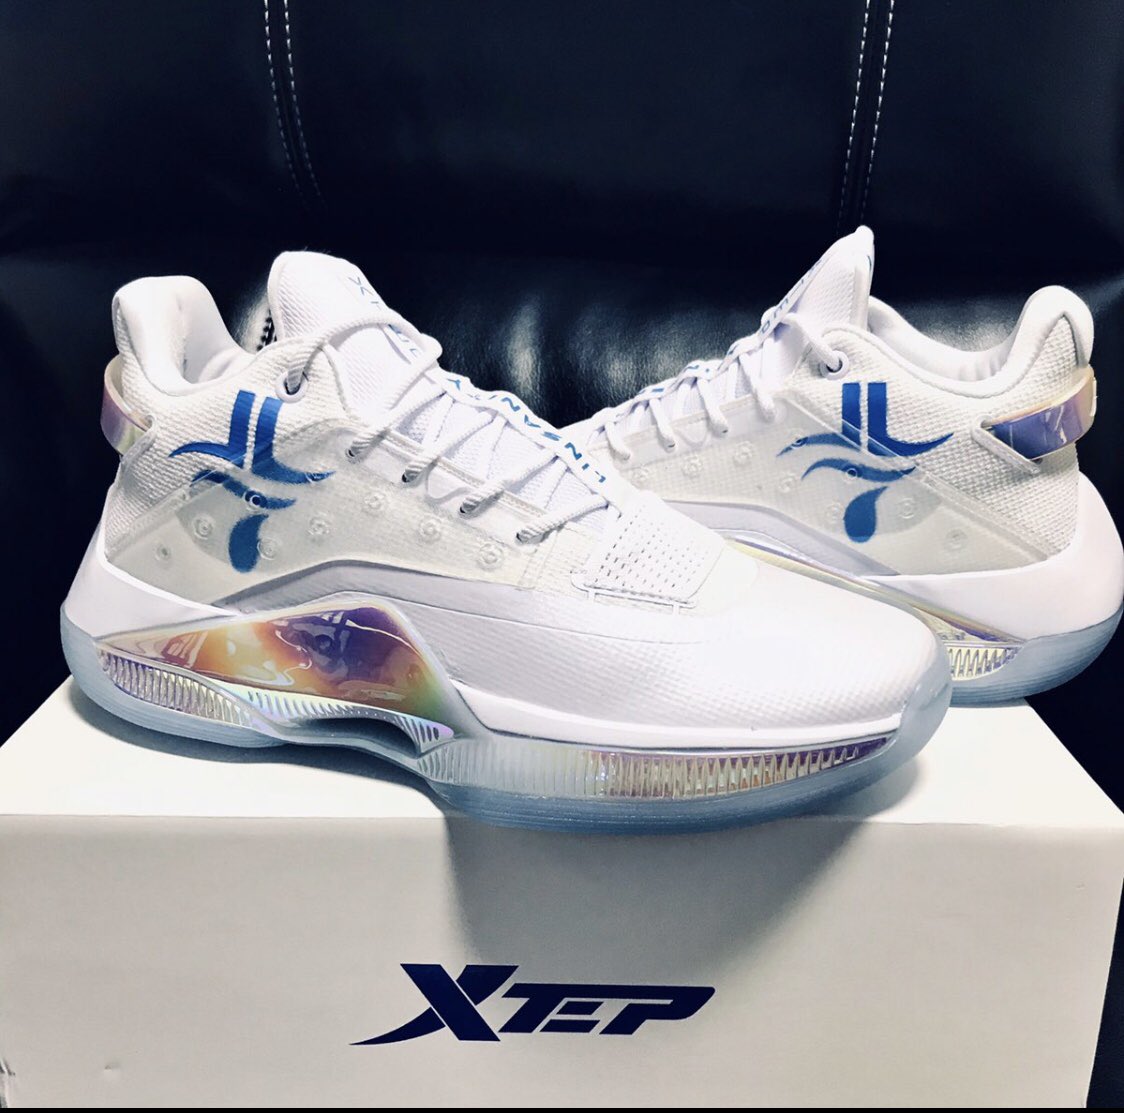 Xtep JL7 Jeremy Lin Beijing Ducks Home Basketball Sneakers - White